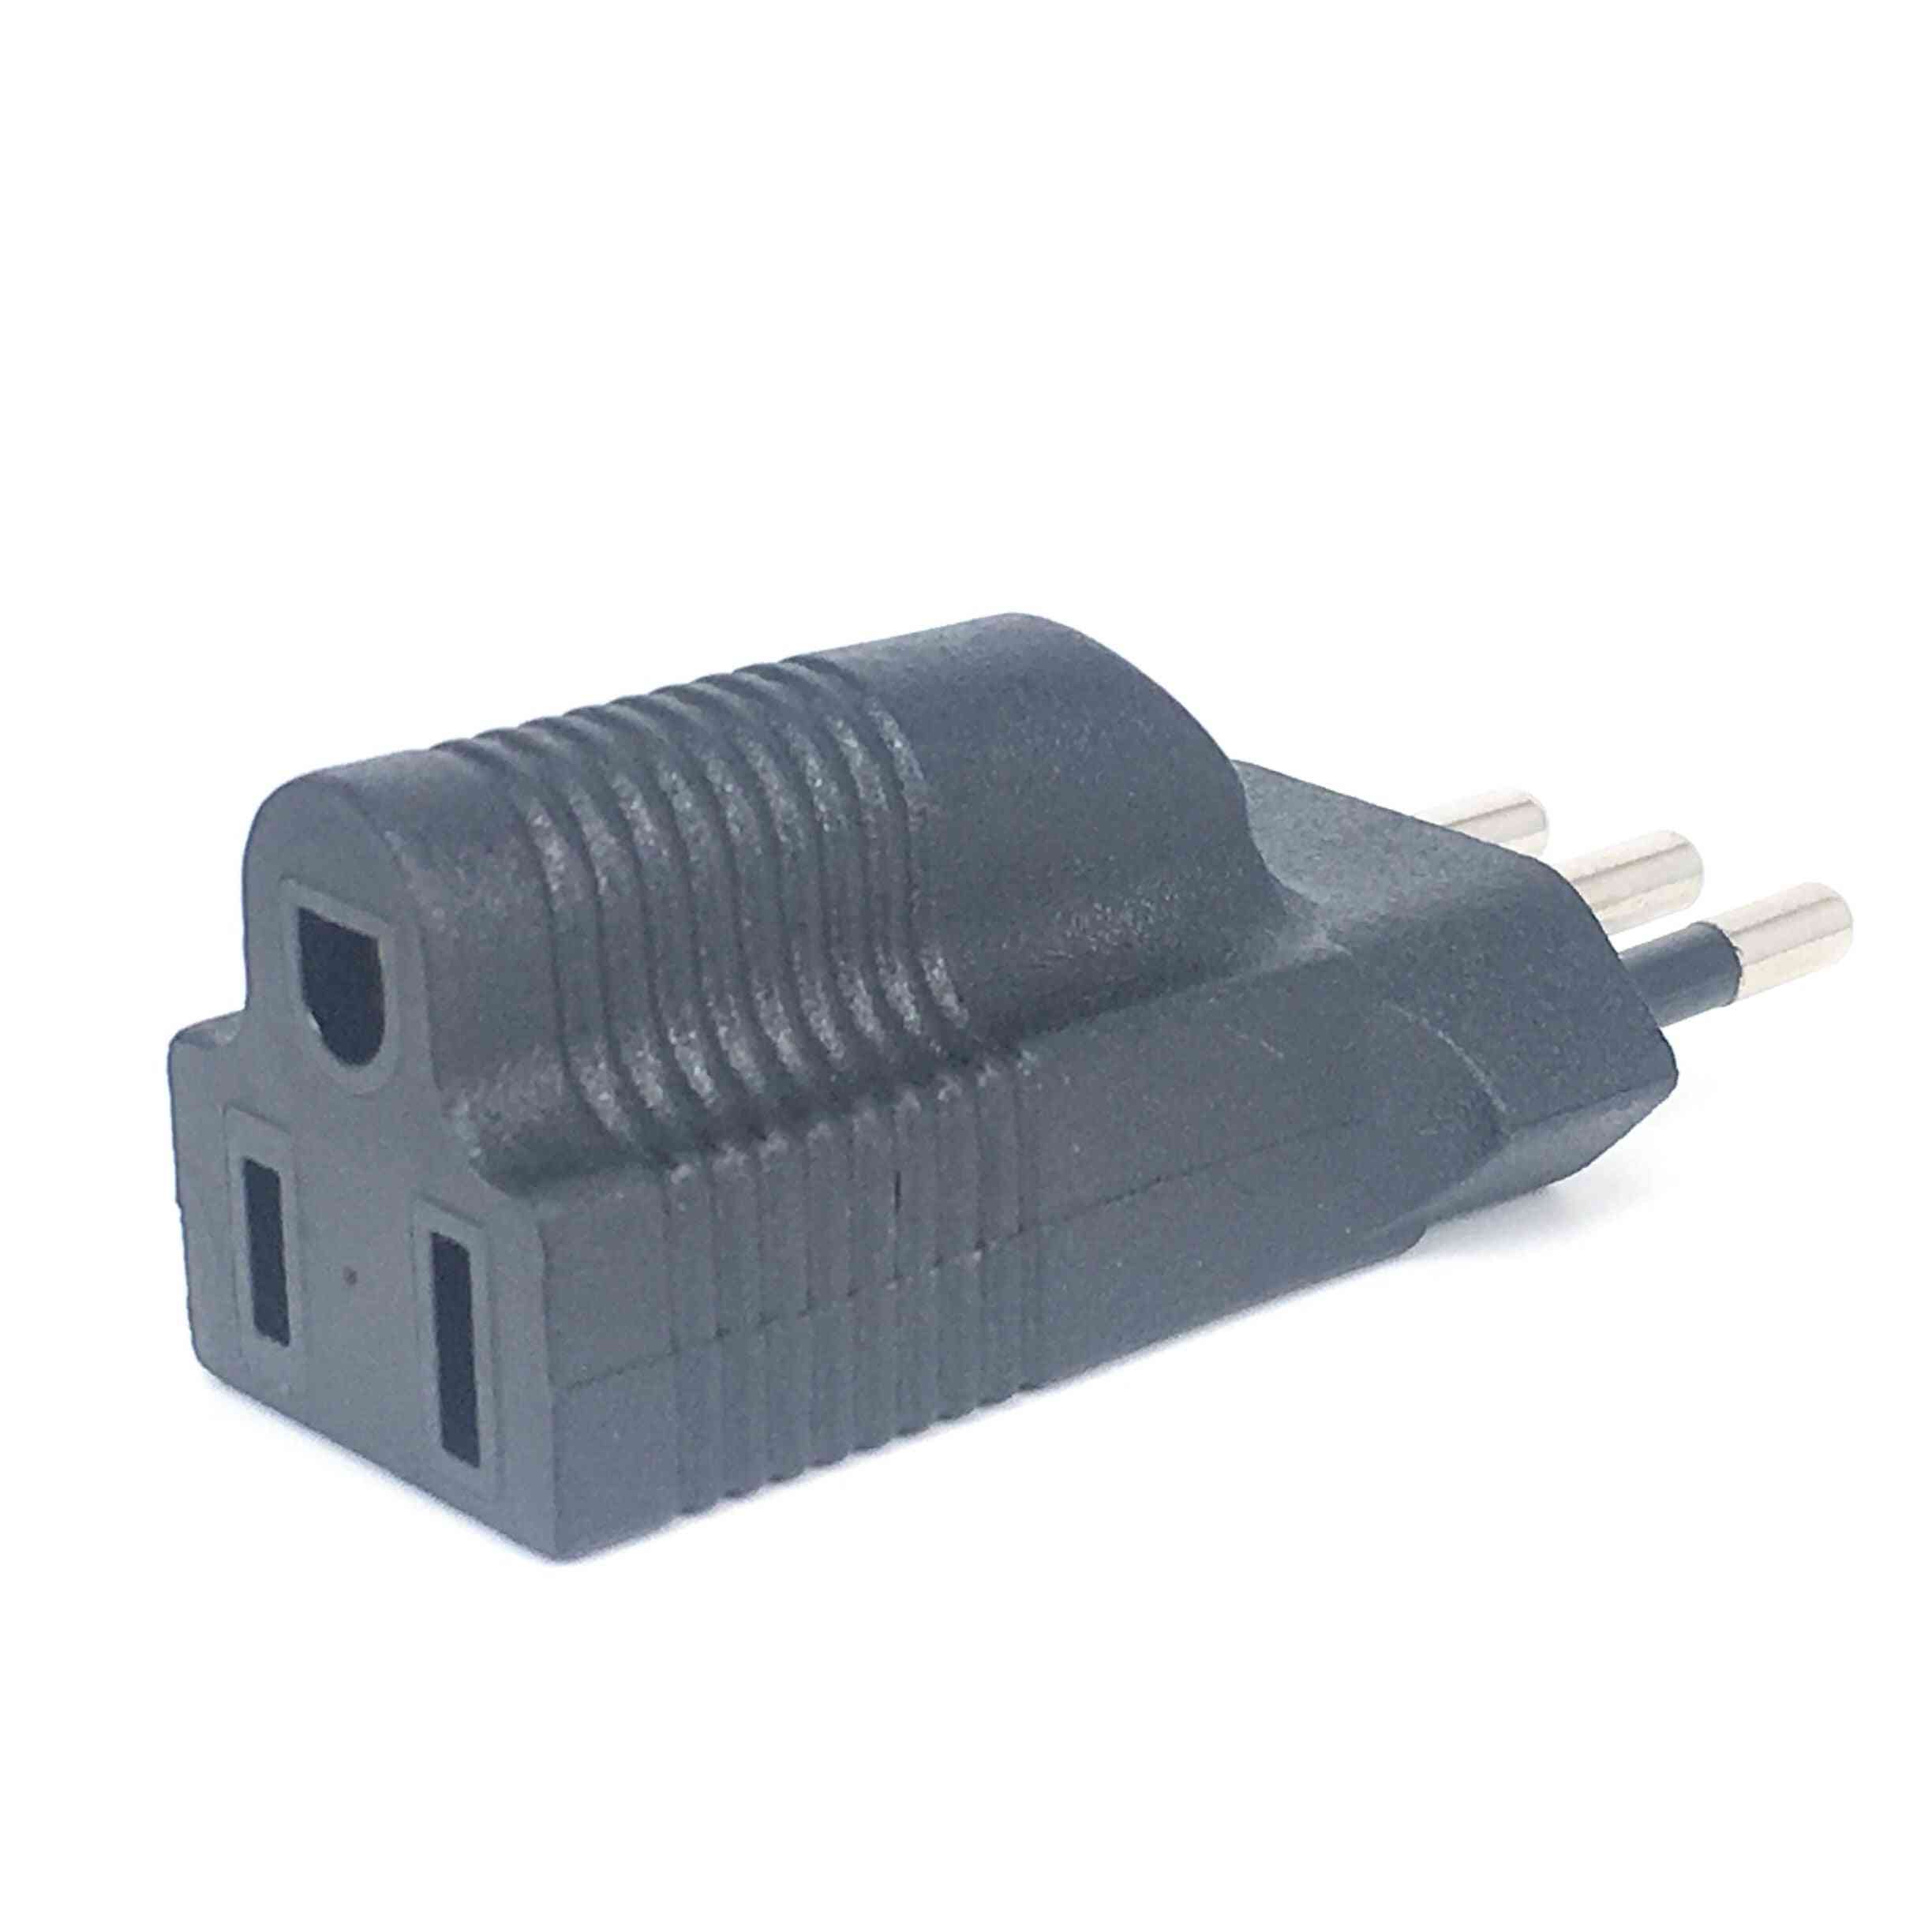 Male Plug To Usa Ac  Female Power Adapter